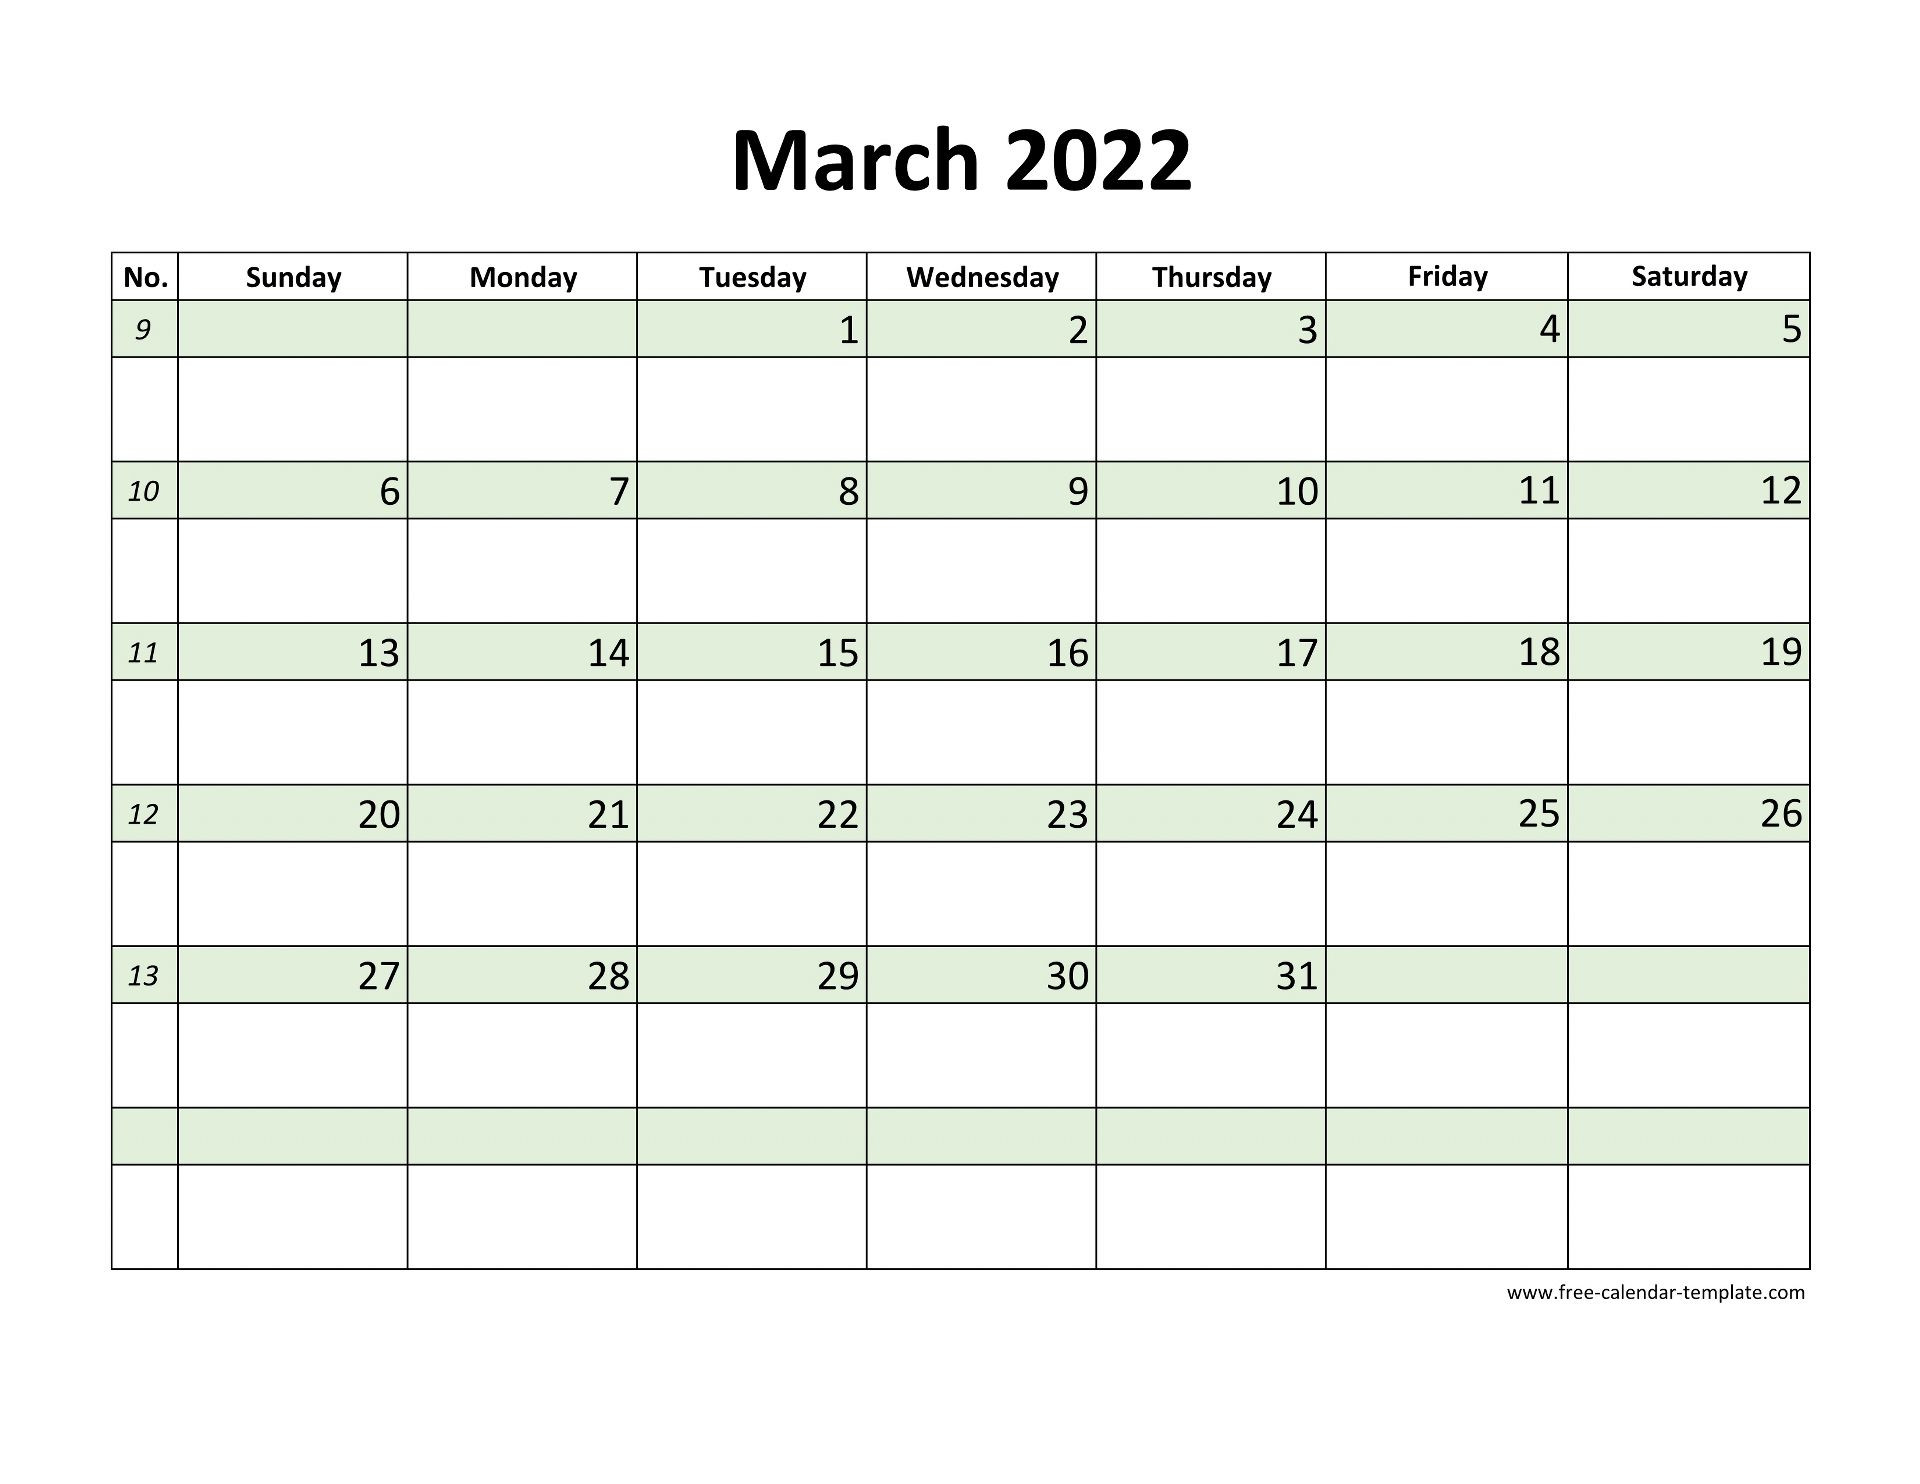 March 2022 Free Calendar Tempplate | Free-Calendar  Free Printable Coloring Calendar 2022